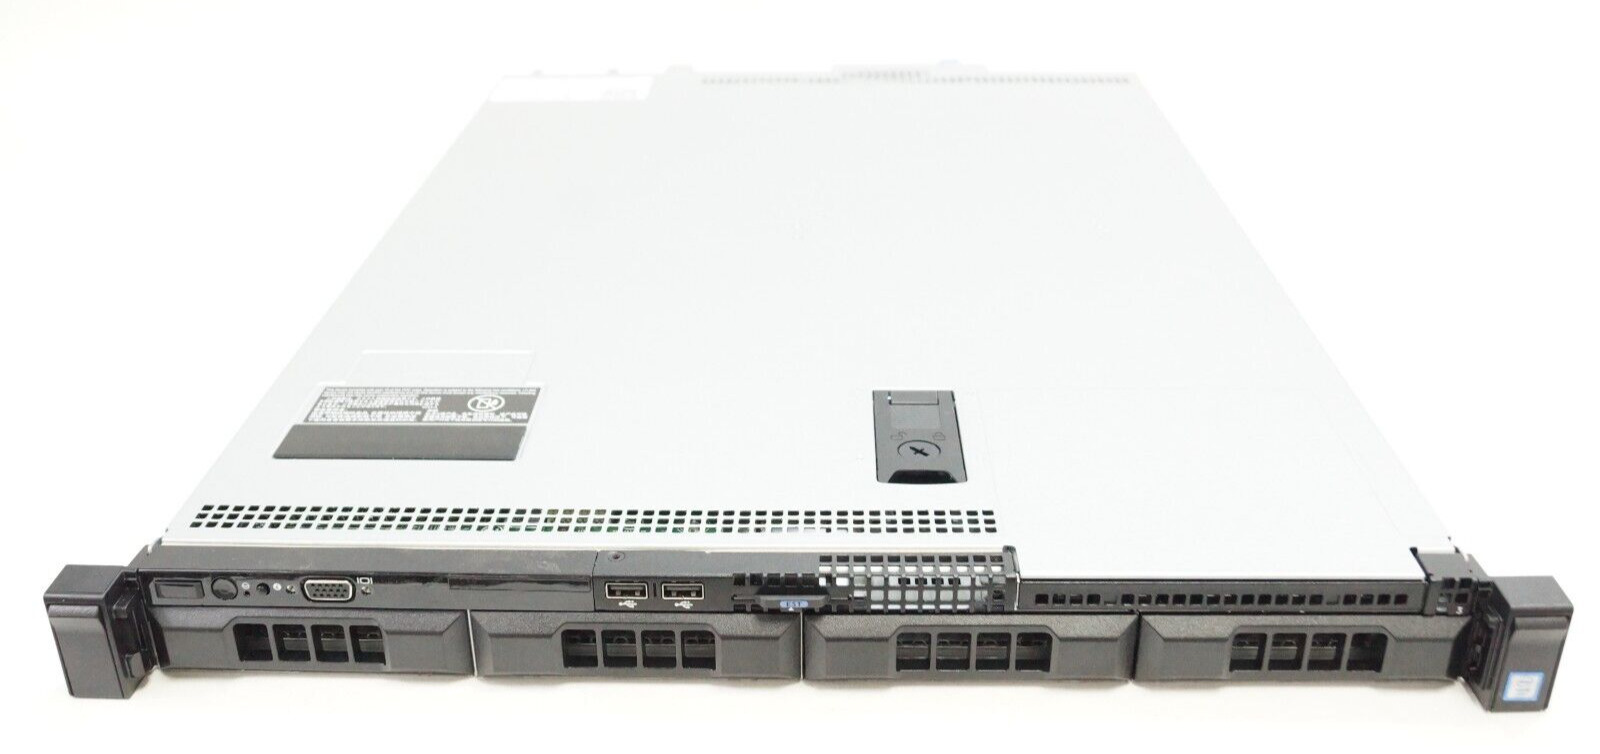 Dell Poweredge R330 | Xeon E3-1220 v6 | 16GB RAM | 28TB Storage | Rails Included